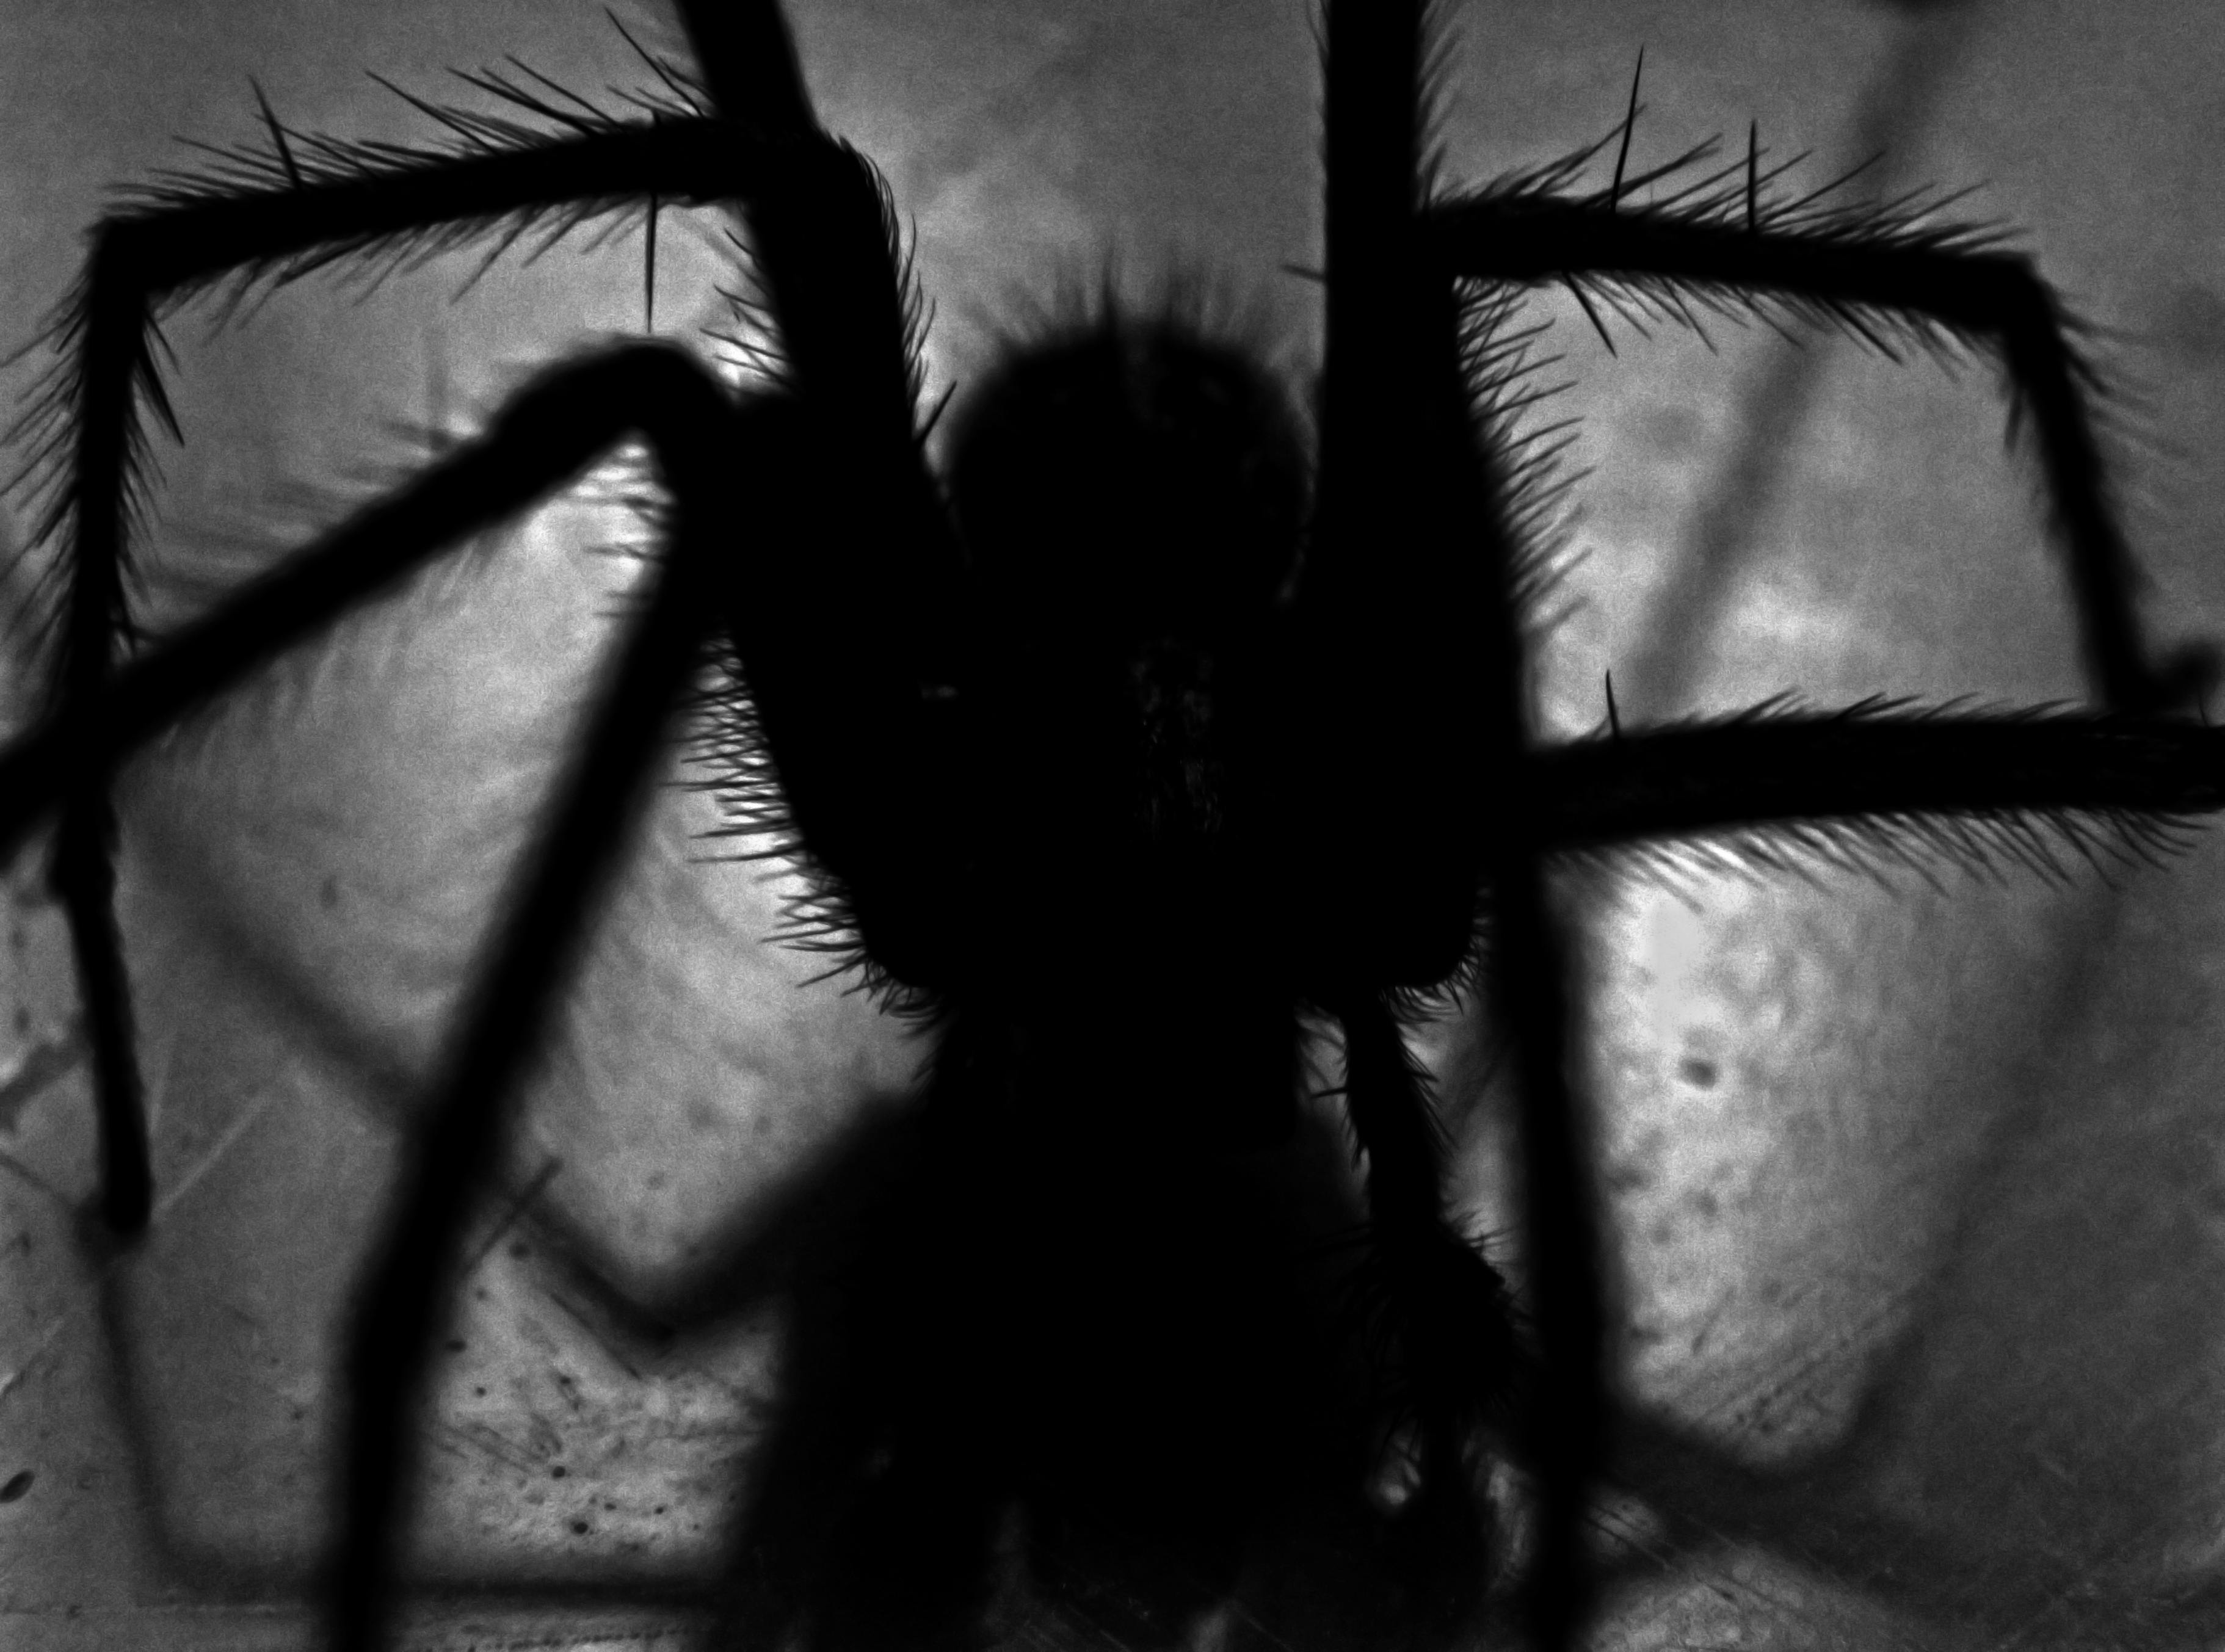 A black spider. | Source: Pexels